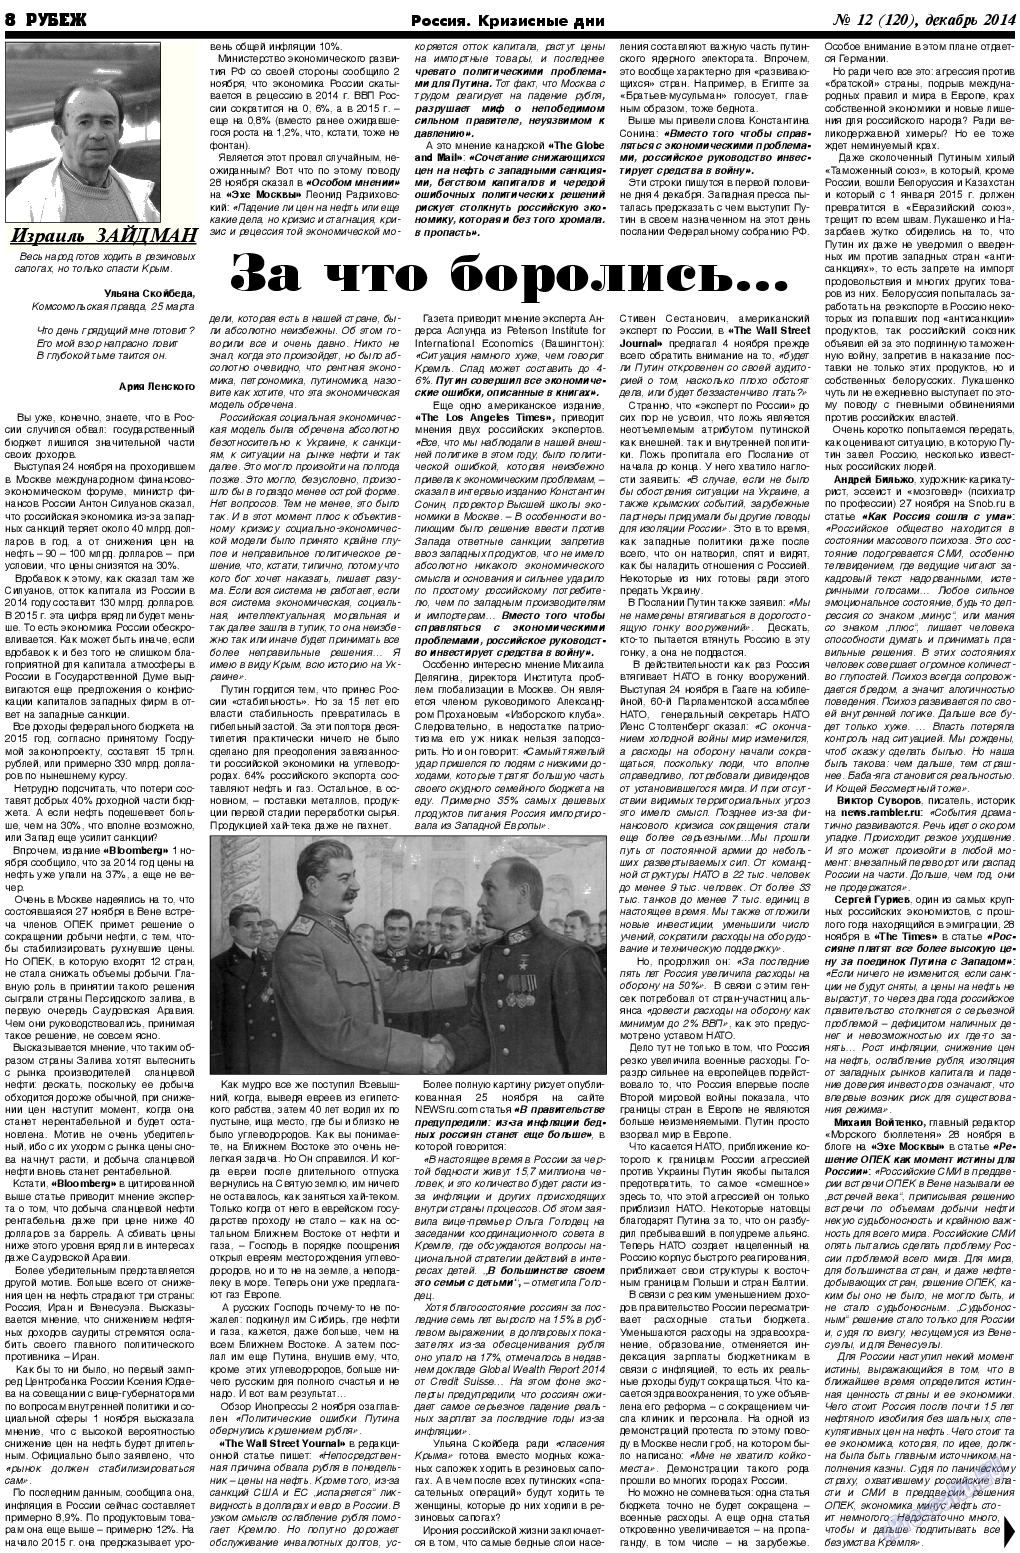 Рубеж, газета. 2014 №12 стр.8